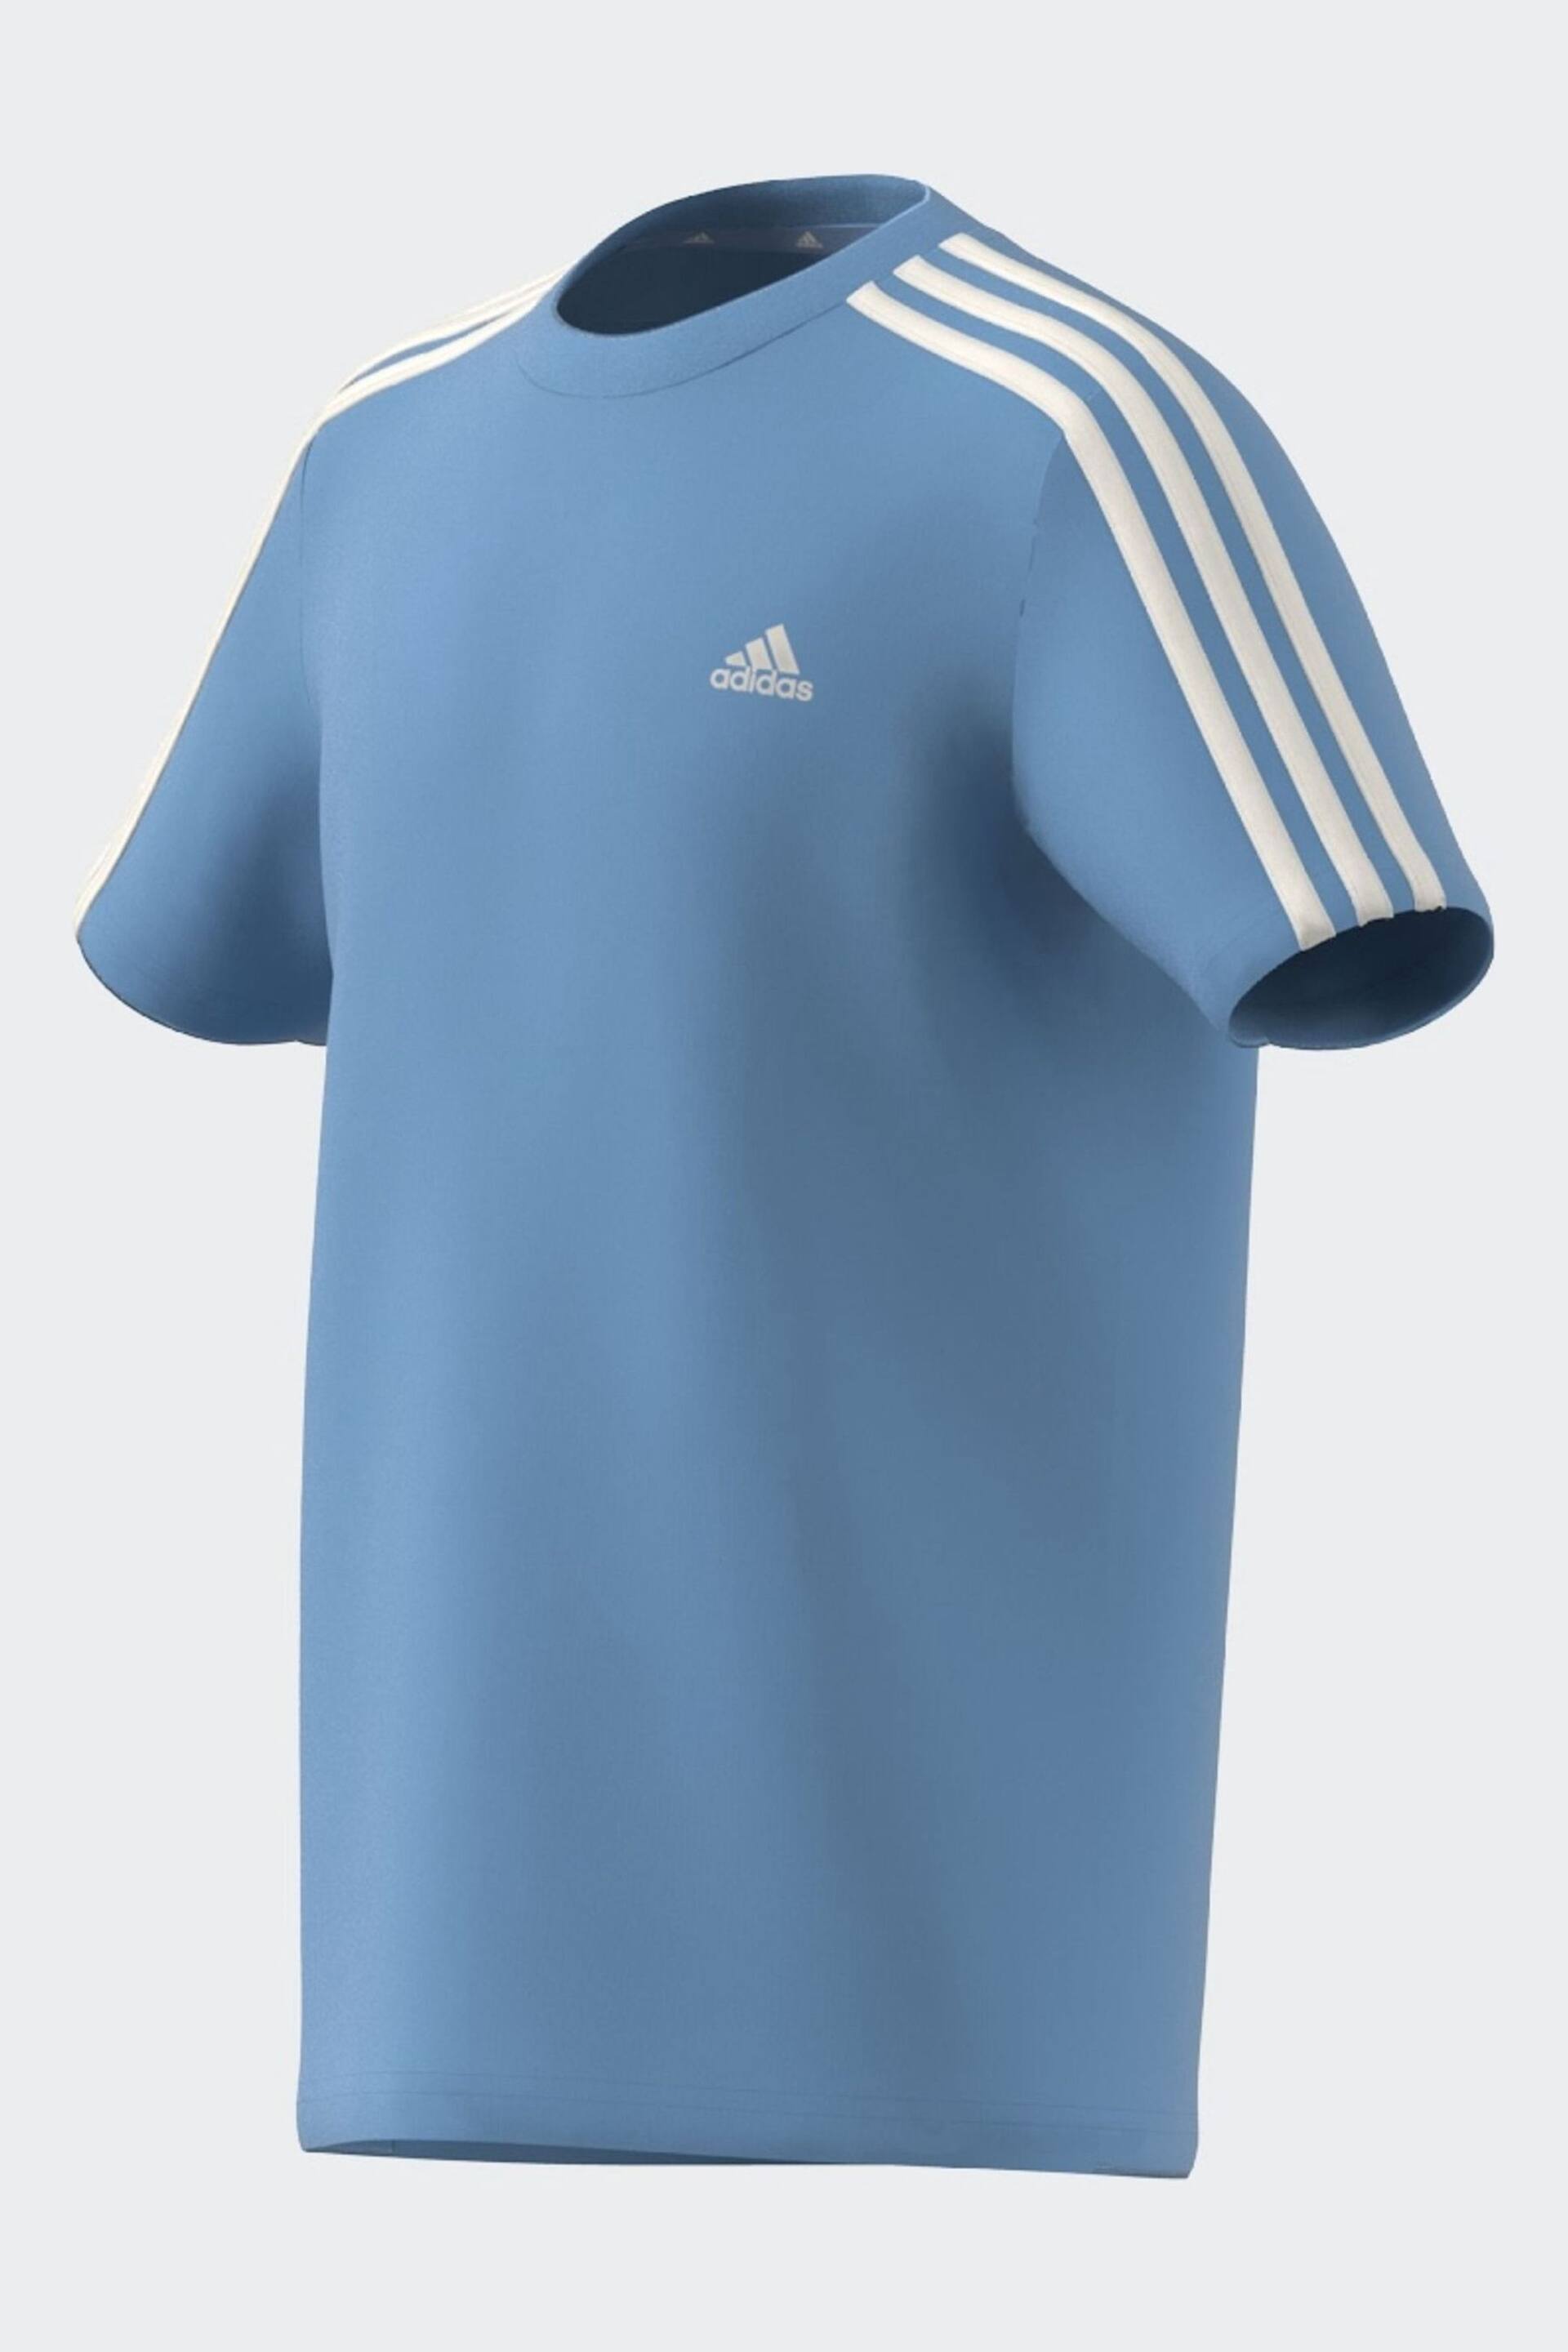 adidas Navy Blue Essentials 3-Stripes Cotton T-Shirt - Image 11 of 16